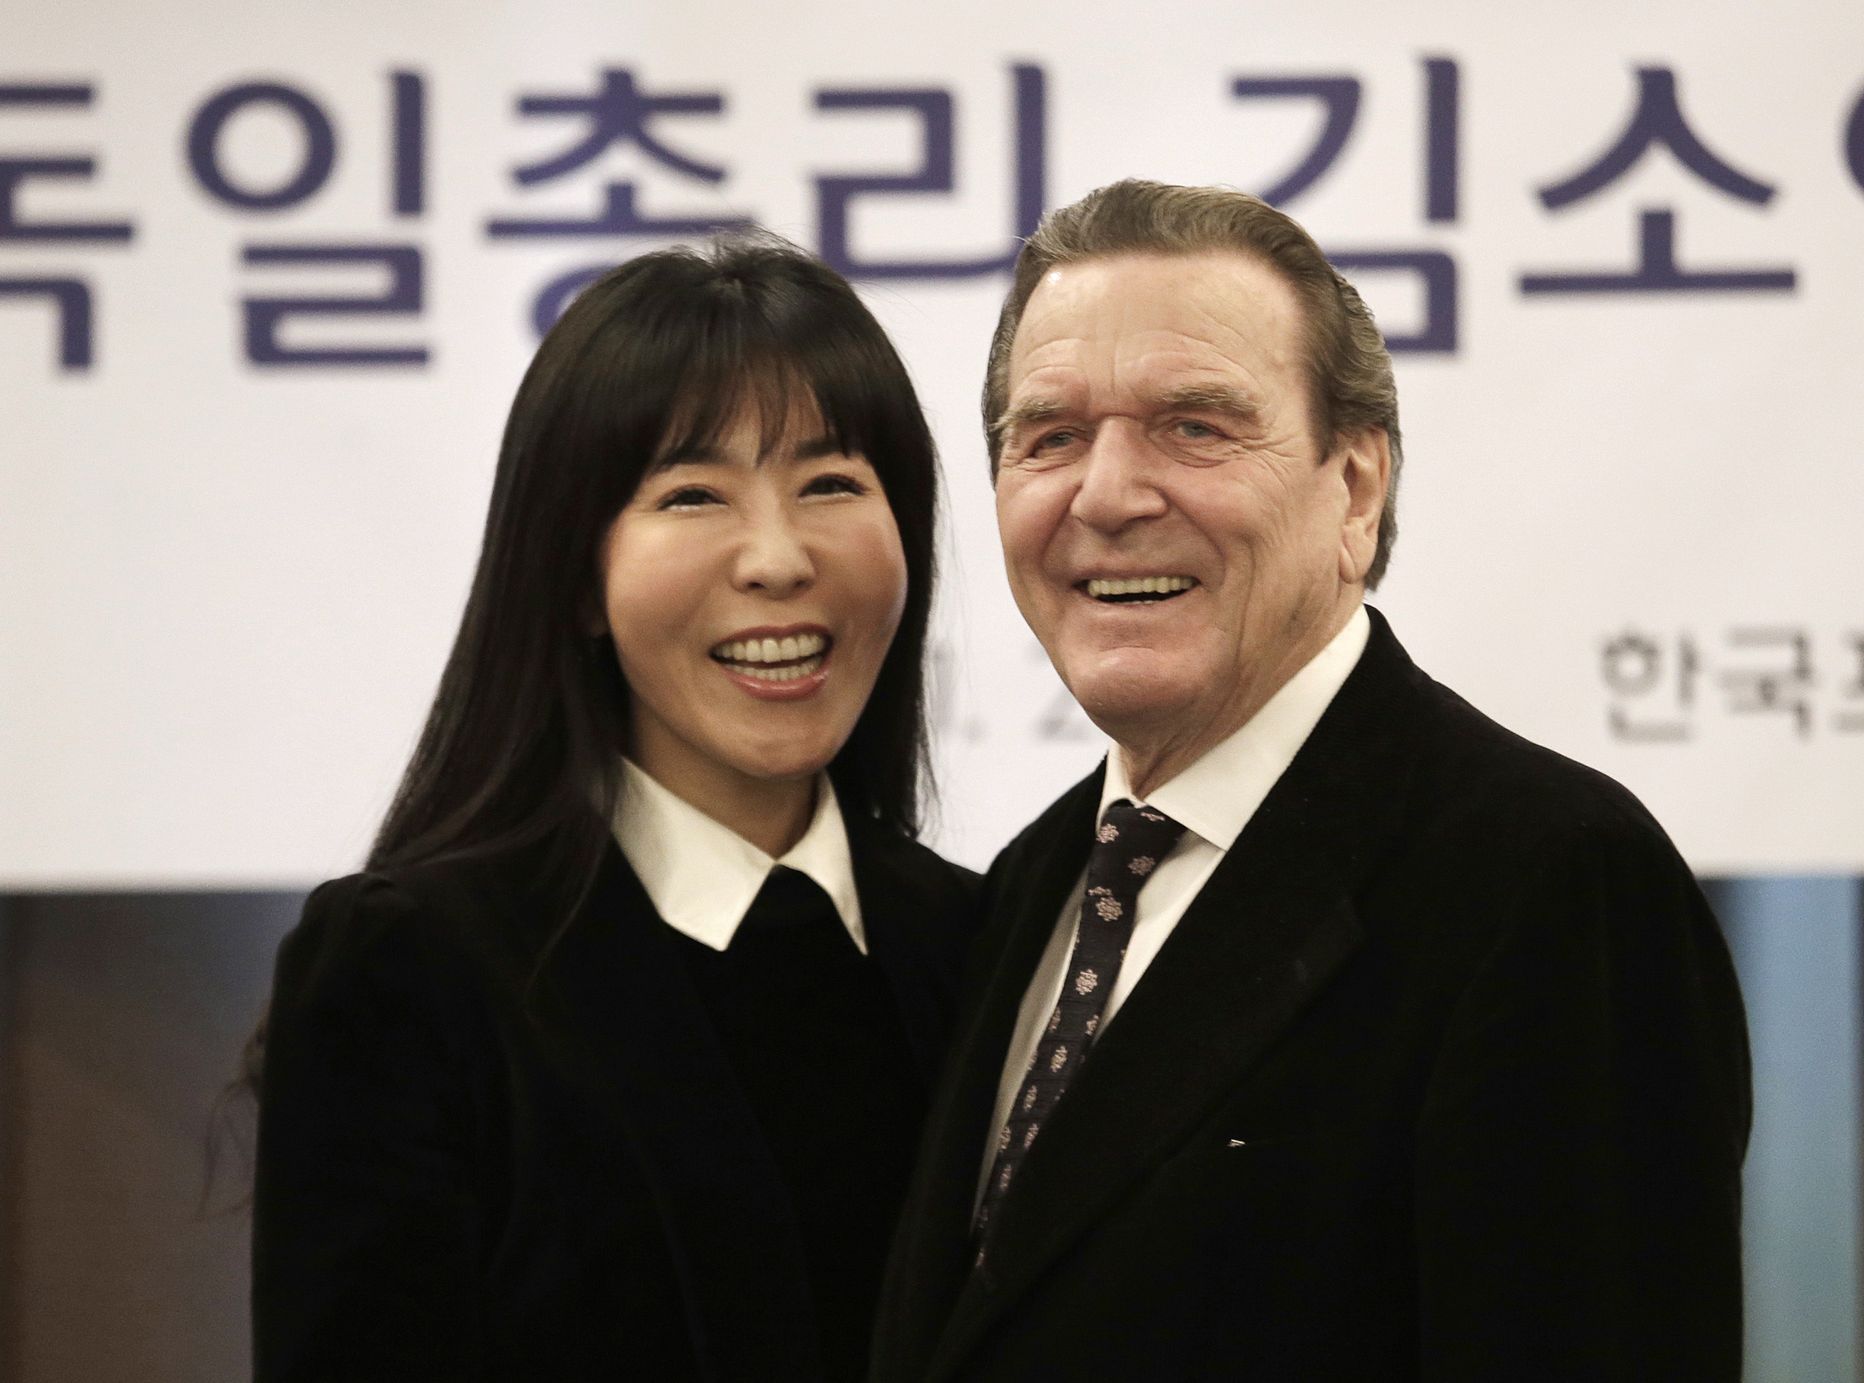 Gerhard Schröder ja Kim So-yeon